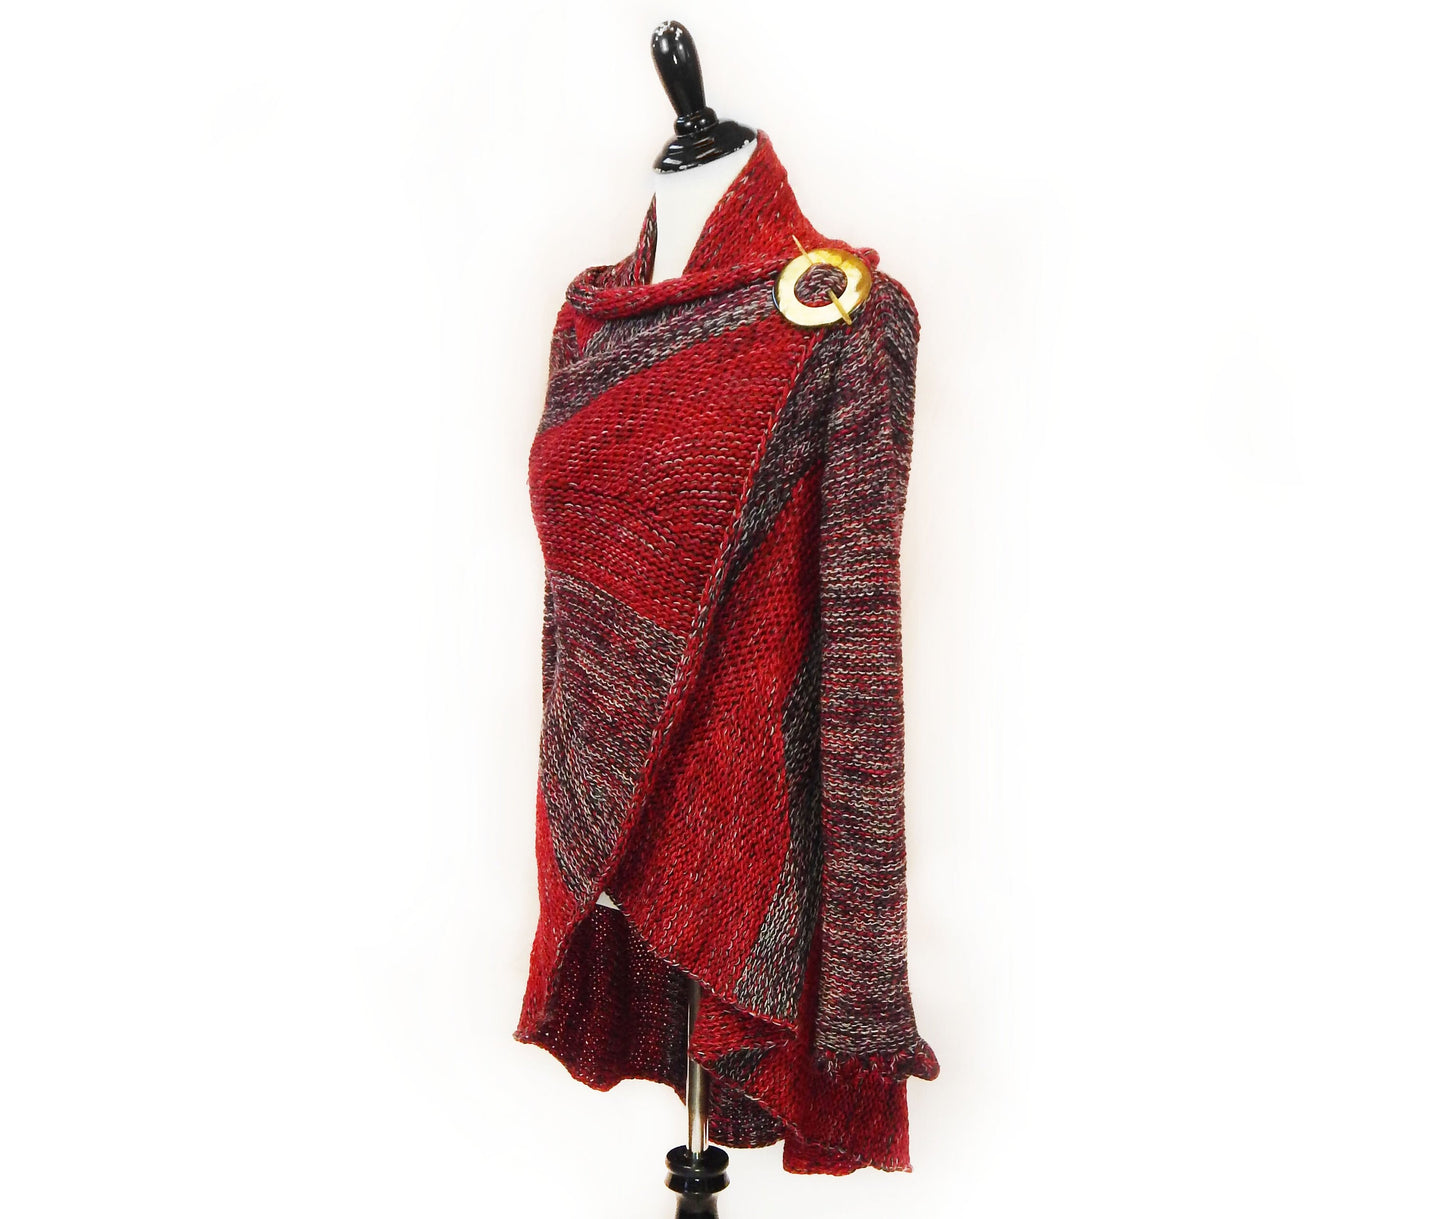 Fine Alpaca Wool Tailored Peacoat Knitted Cardigan Elegant Petticoat Red